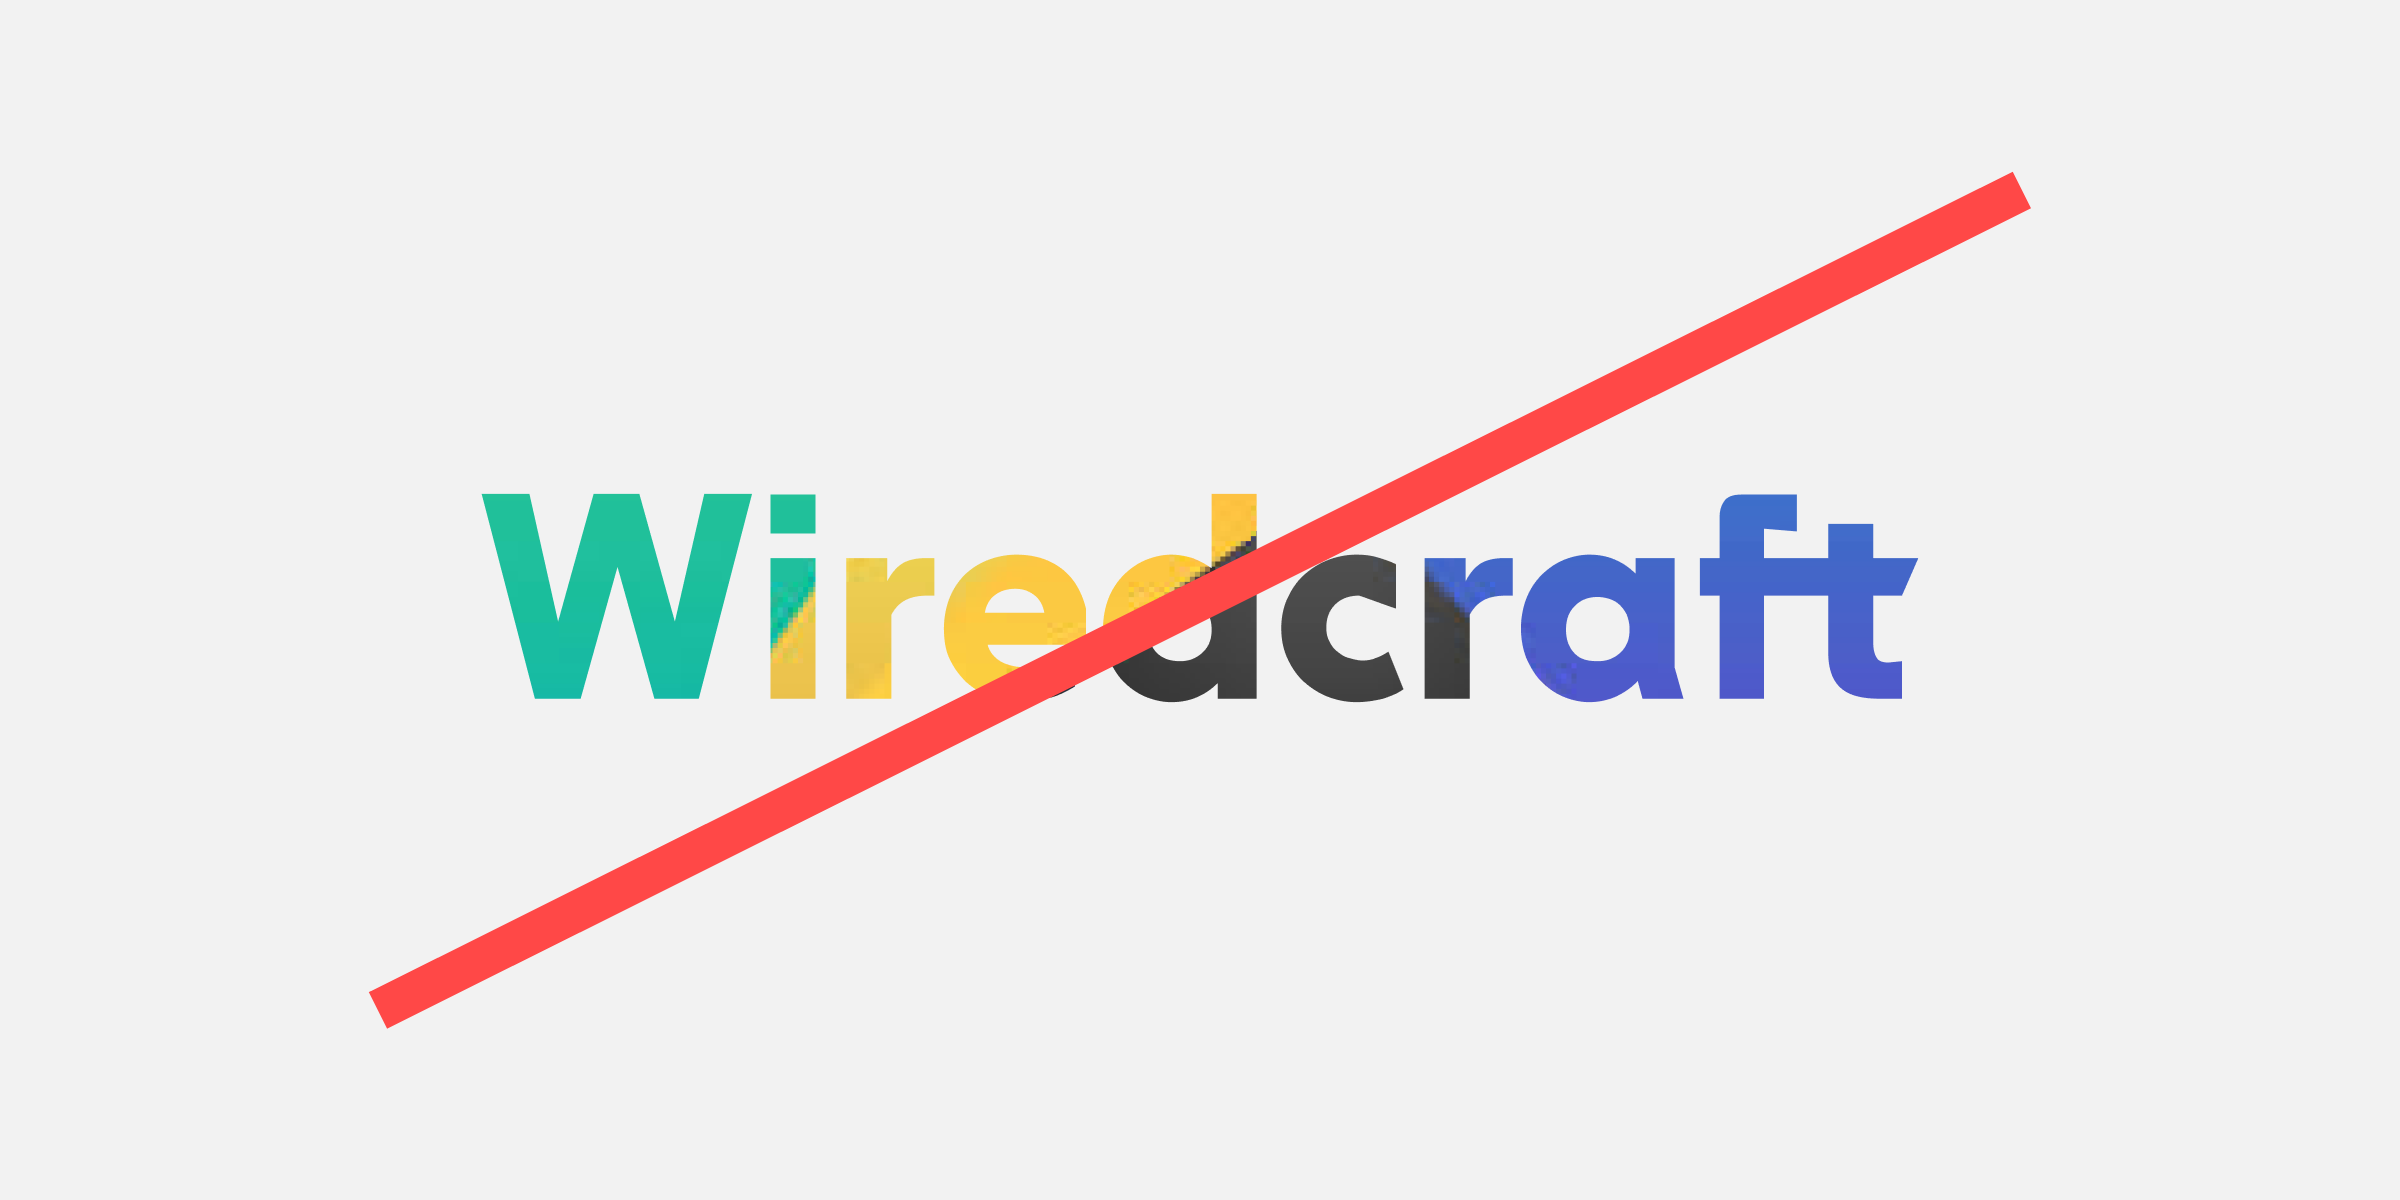 wiredcraft logo misuse